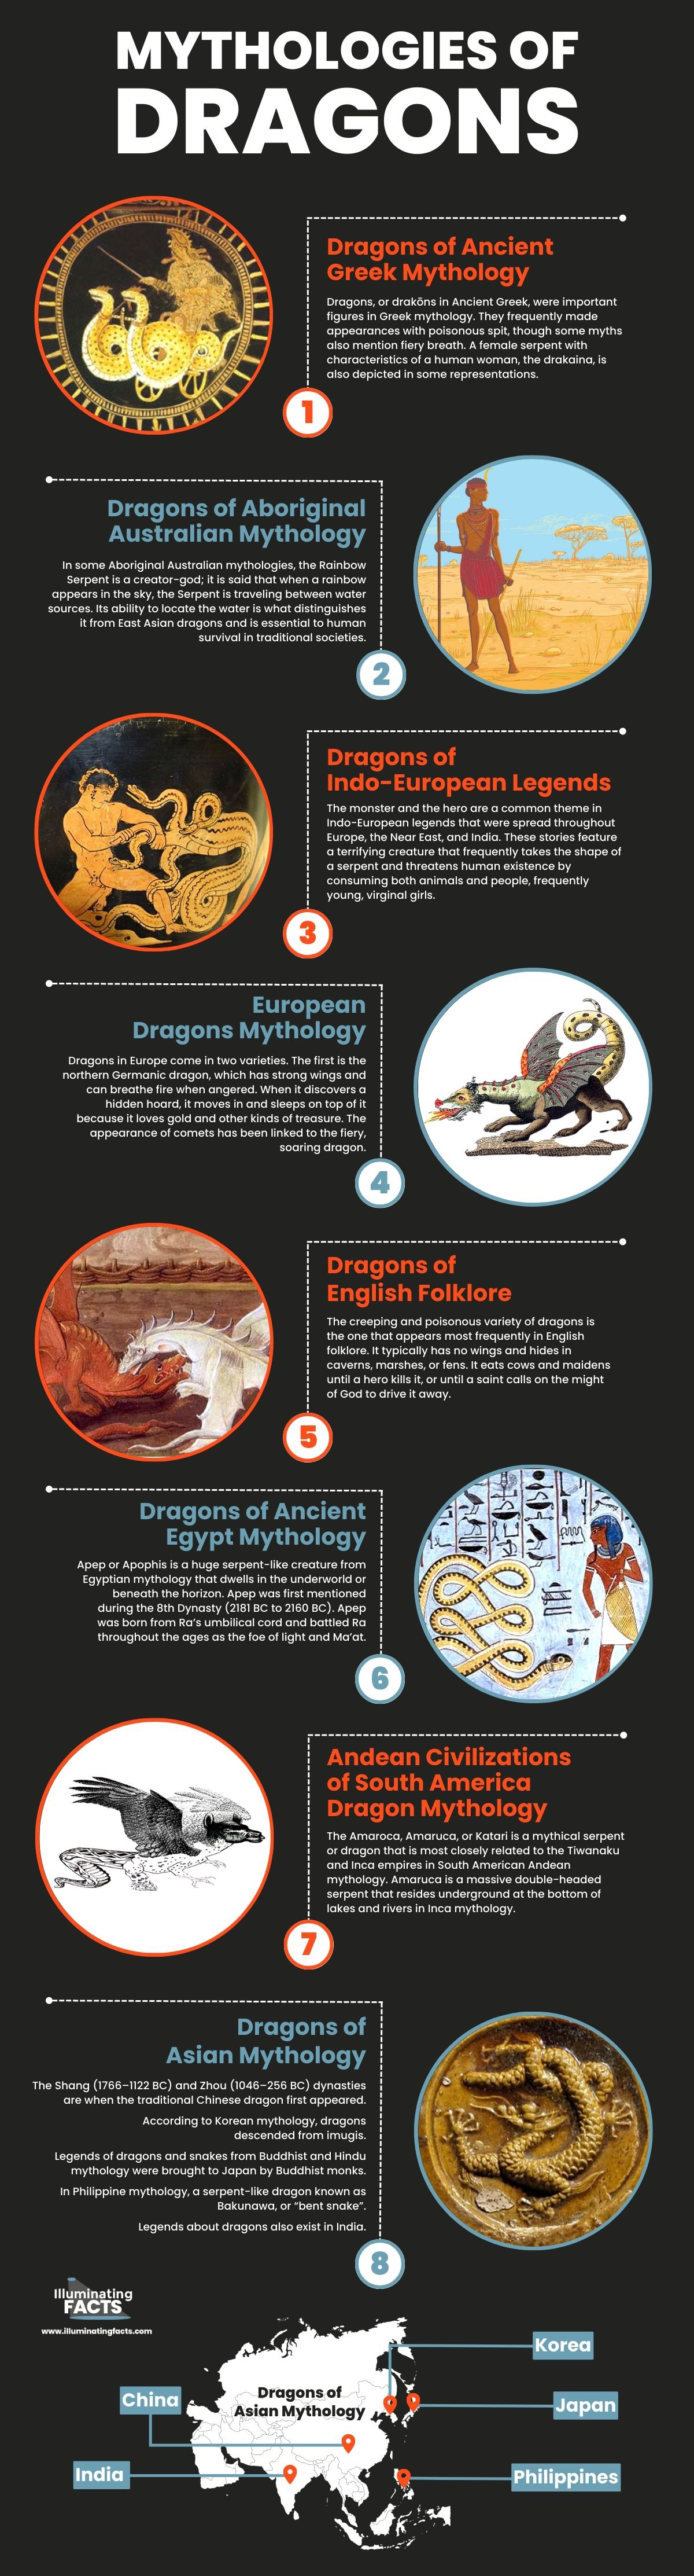 Mythologies of Dragons